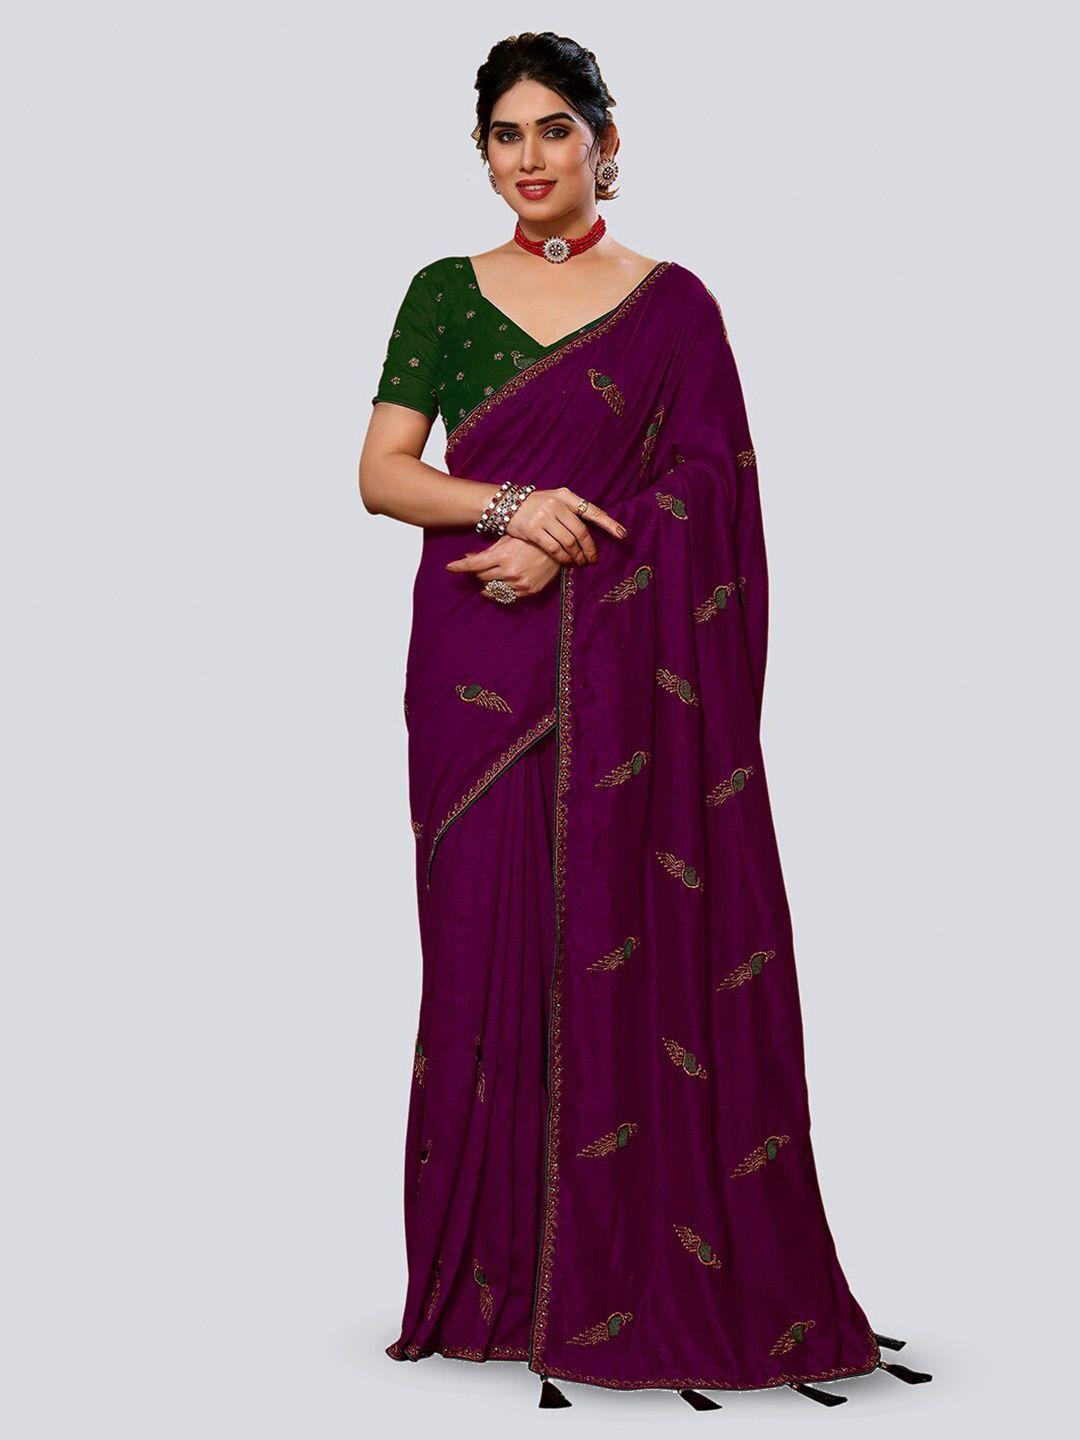 mitera purple & green ethnic motifs embroidered beads and stones saree